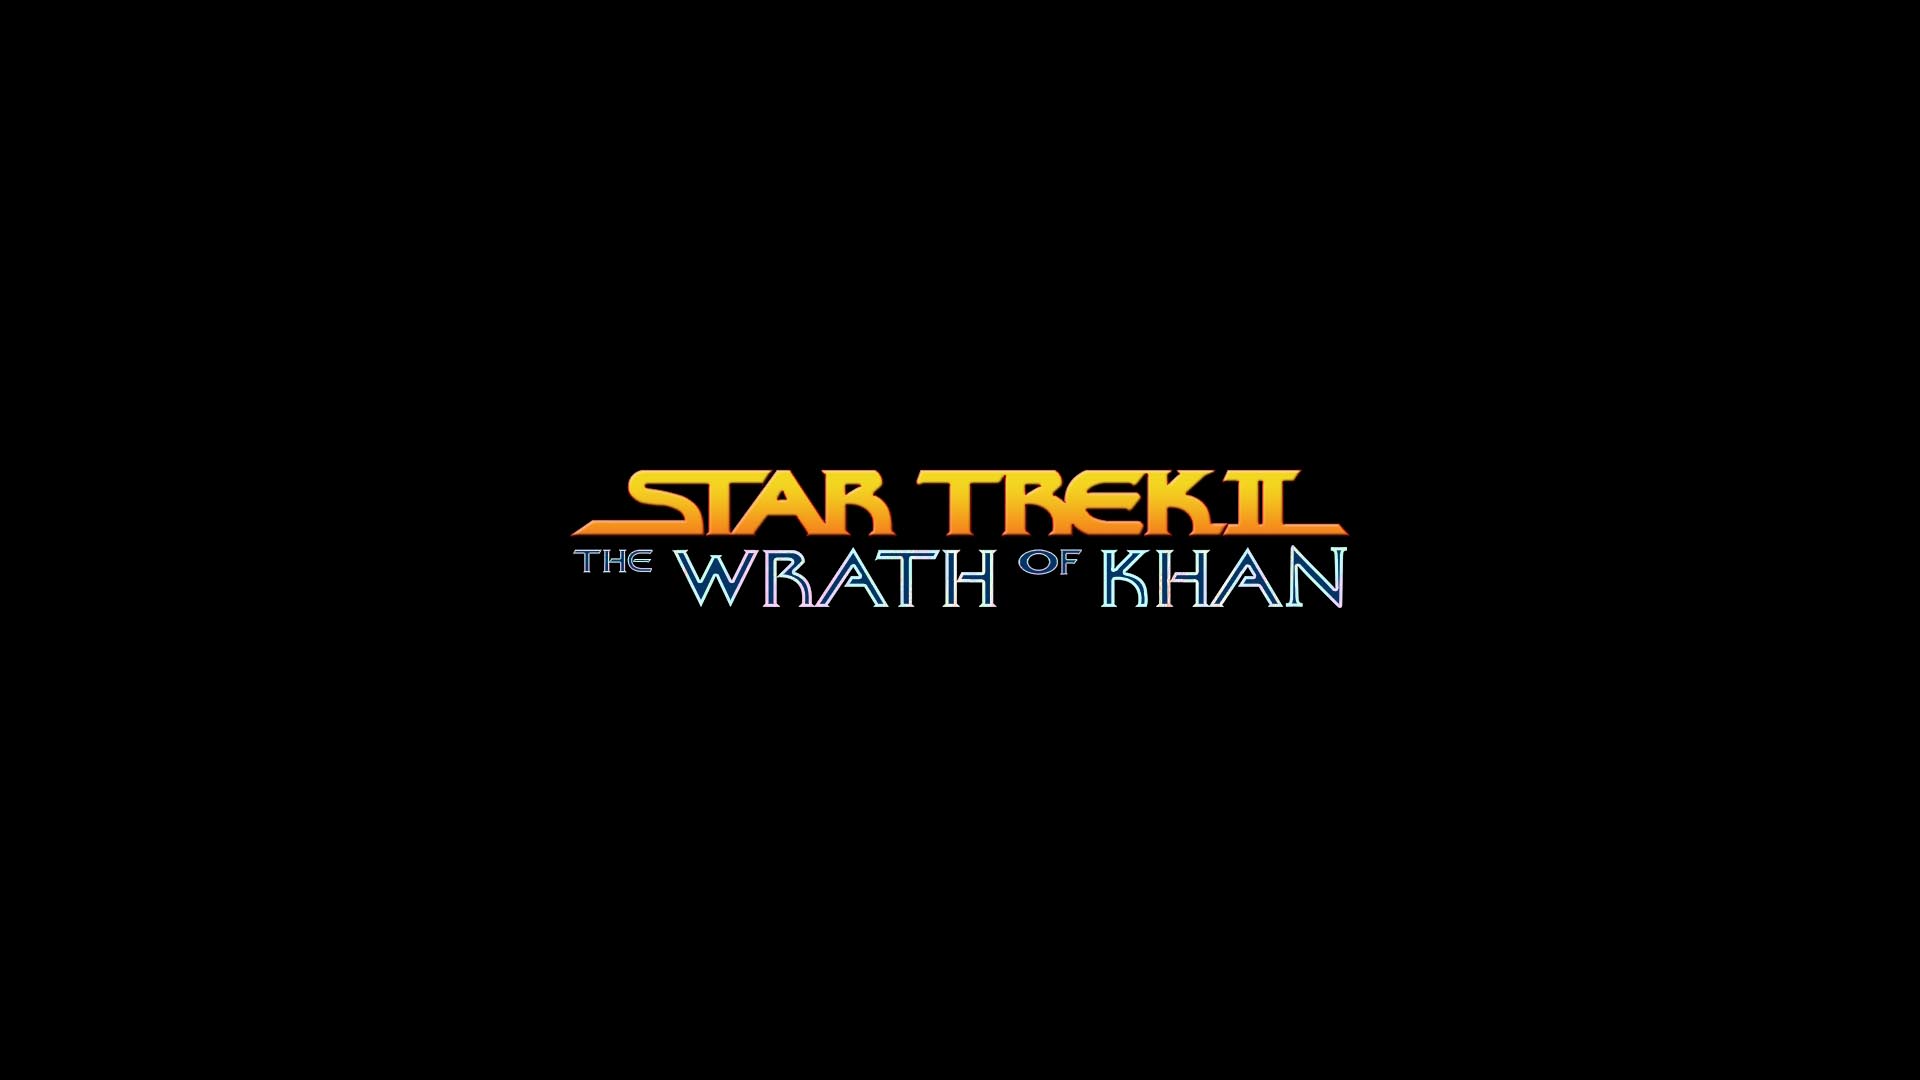 movie, star trek ii: the wrath of khan, star trek